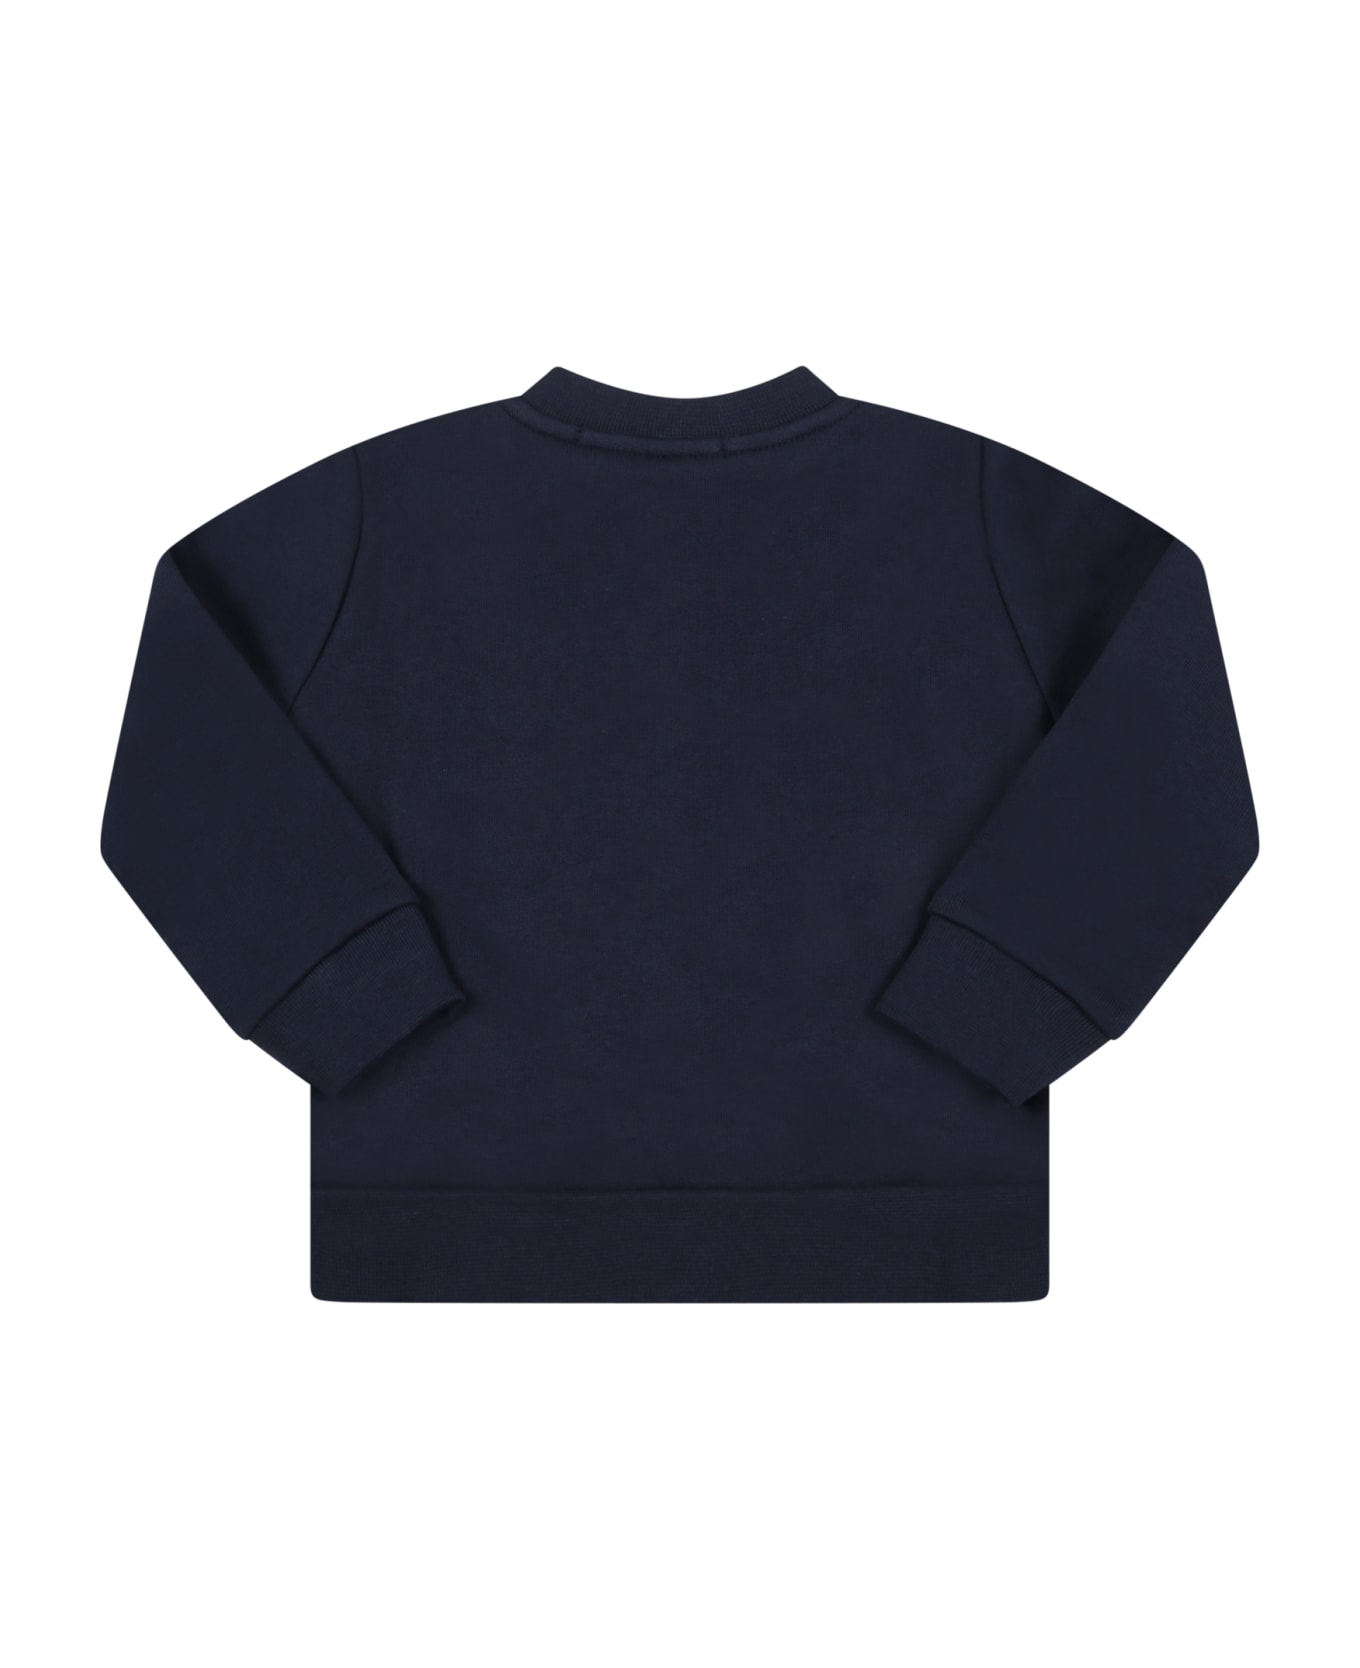 MSGM Blue Sweatshirt For Baby Boy With White Logo - Blue